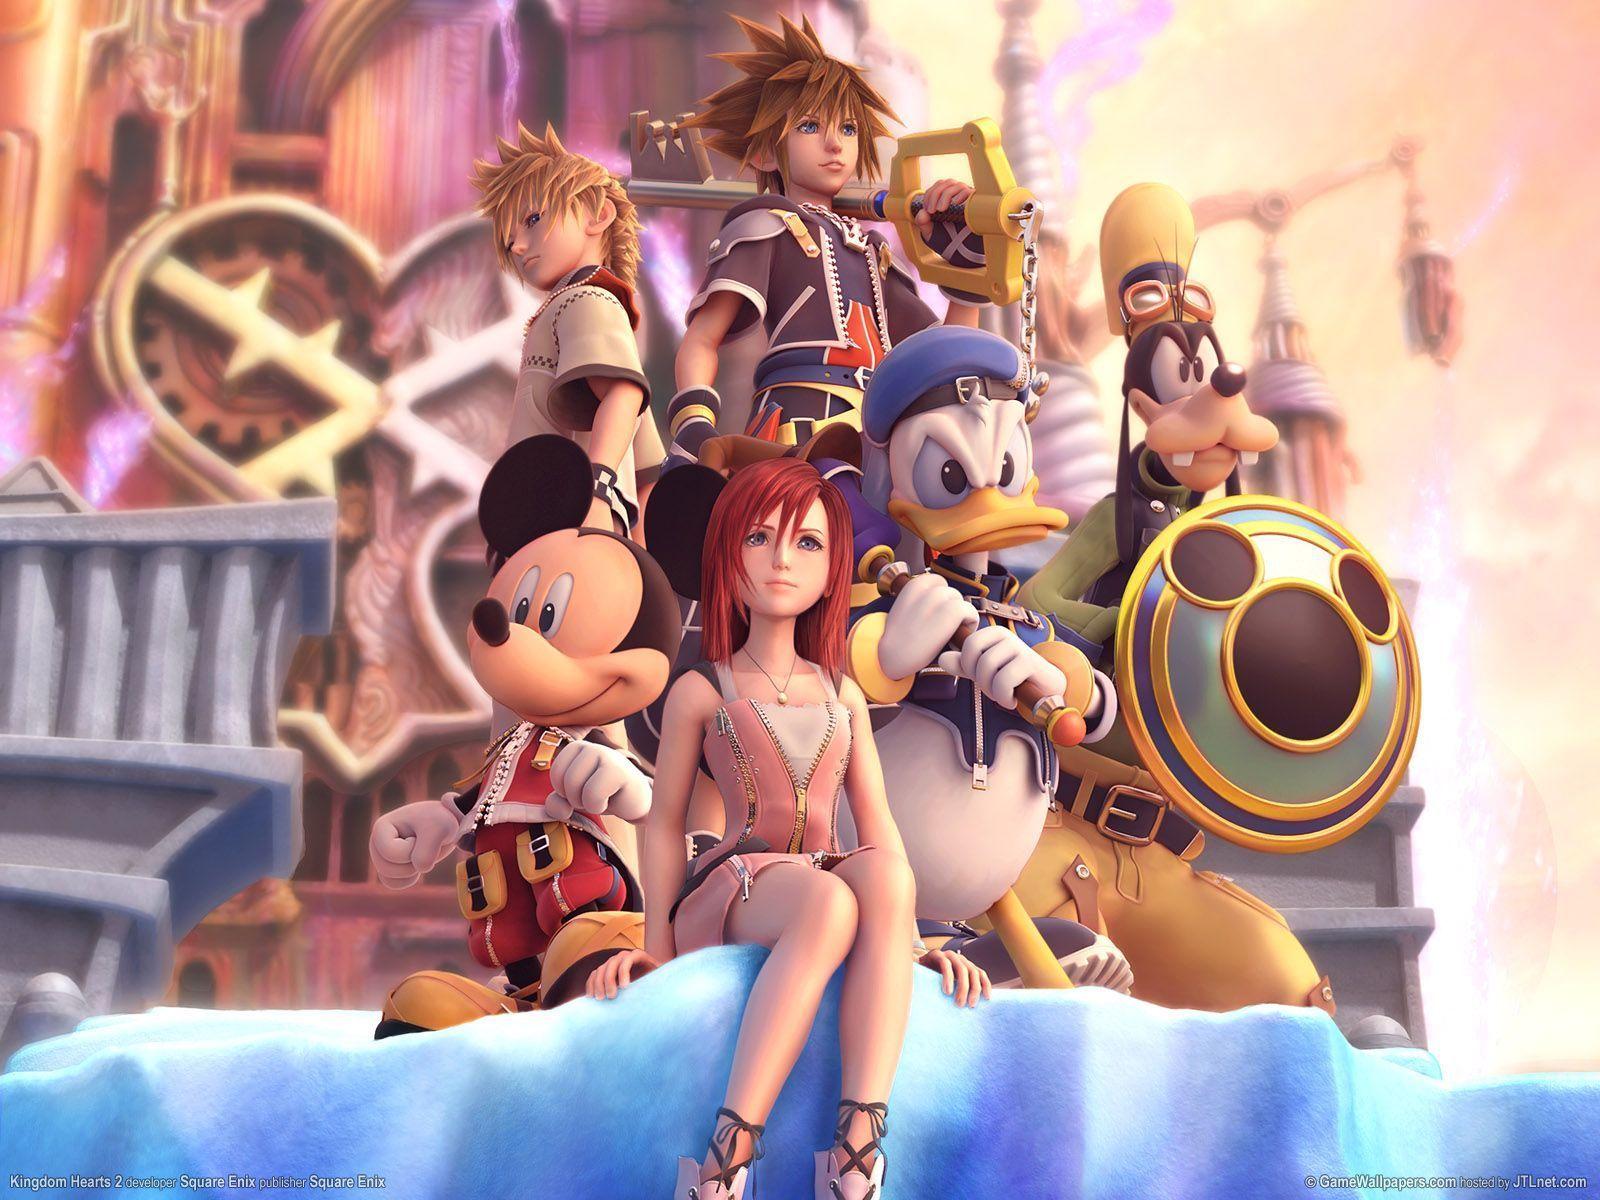 Kingdom Hearts Gang Google Skins, Kingdom Hearts Gang Google